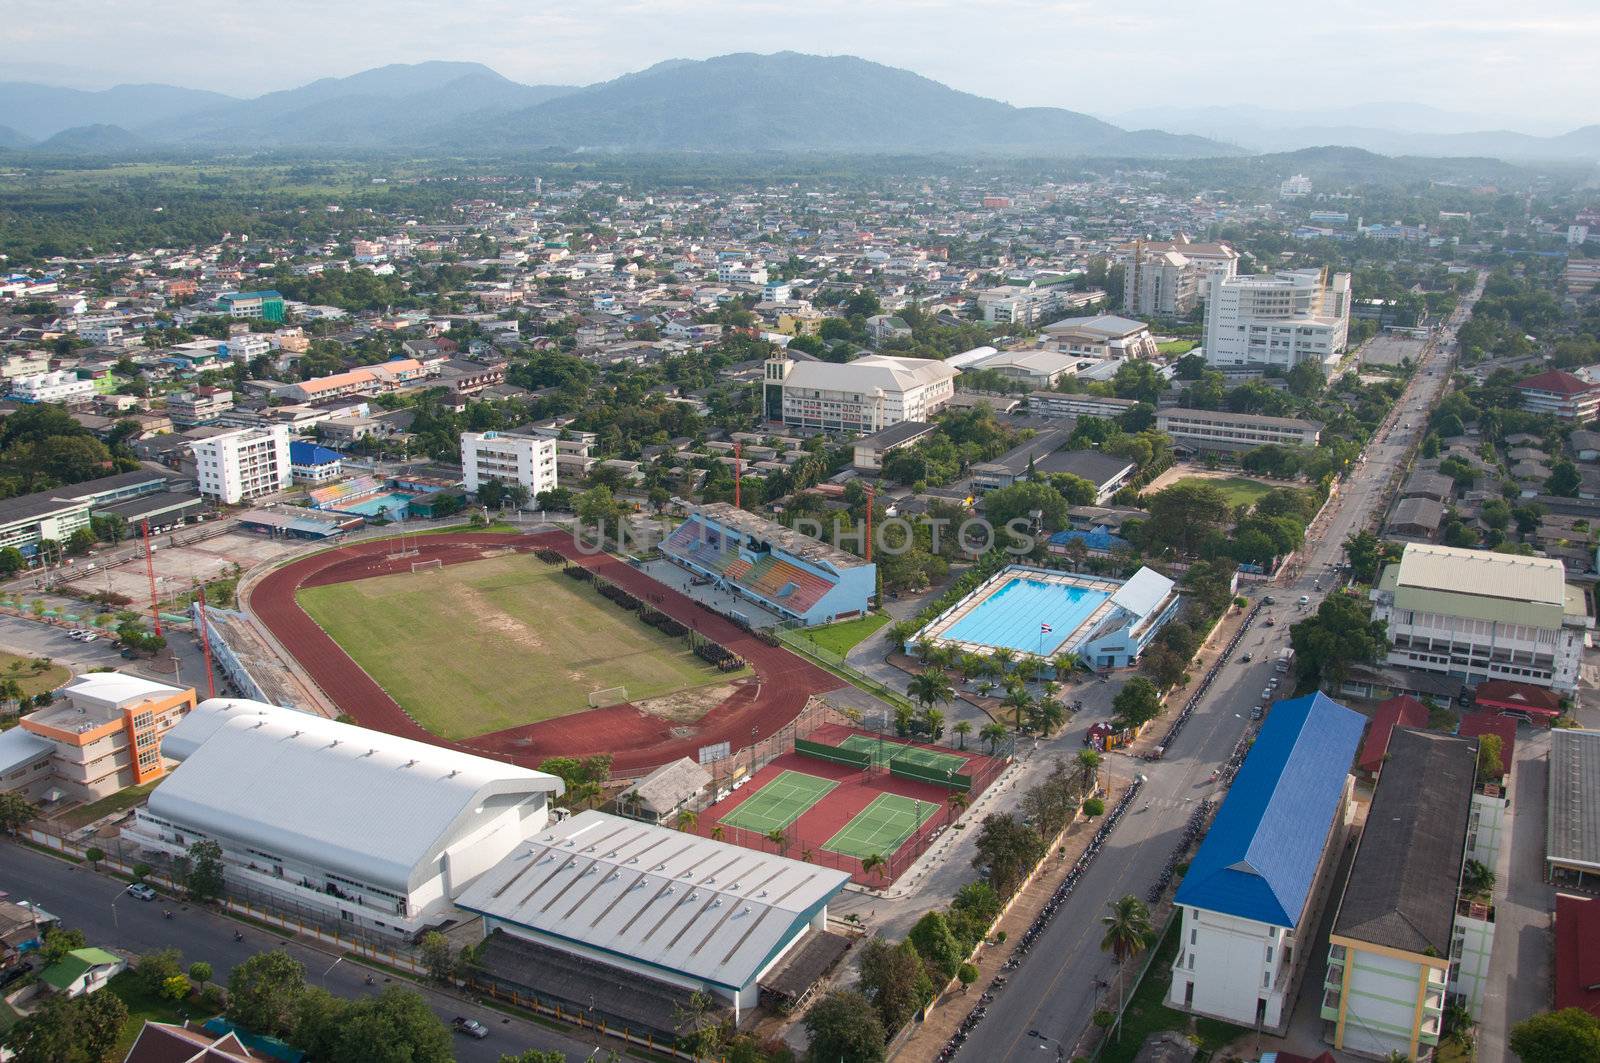 yala sport field in yala, thailand by ngarare